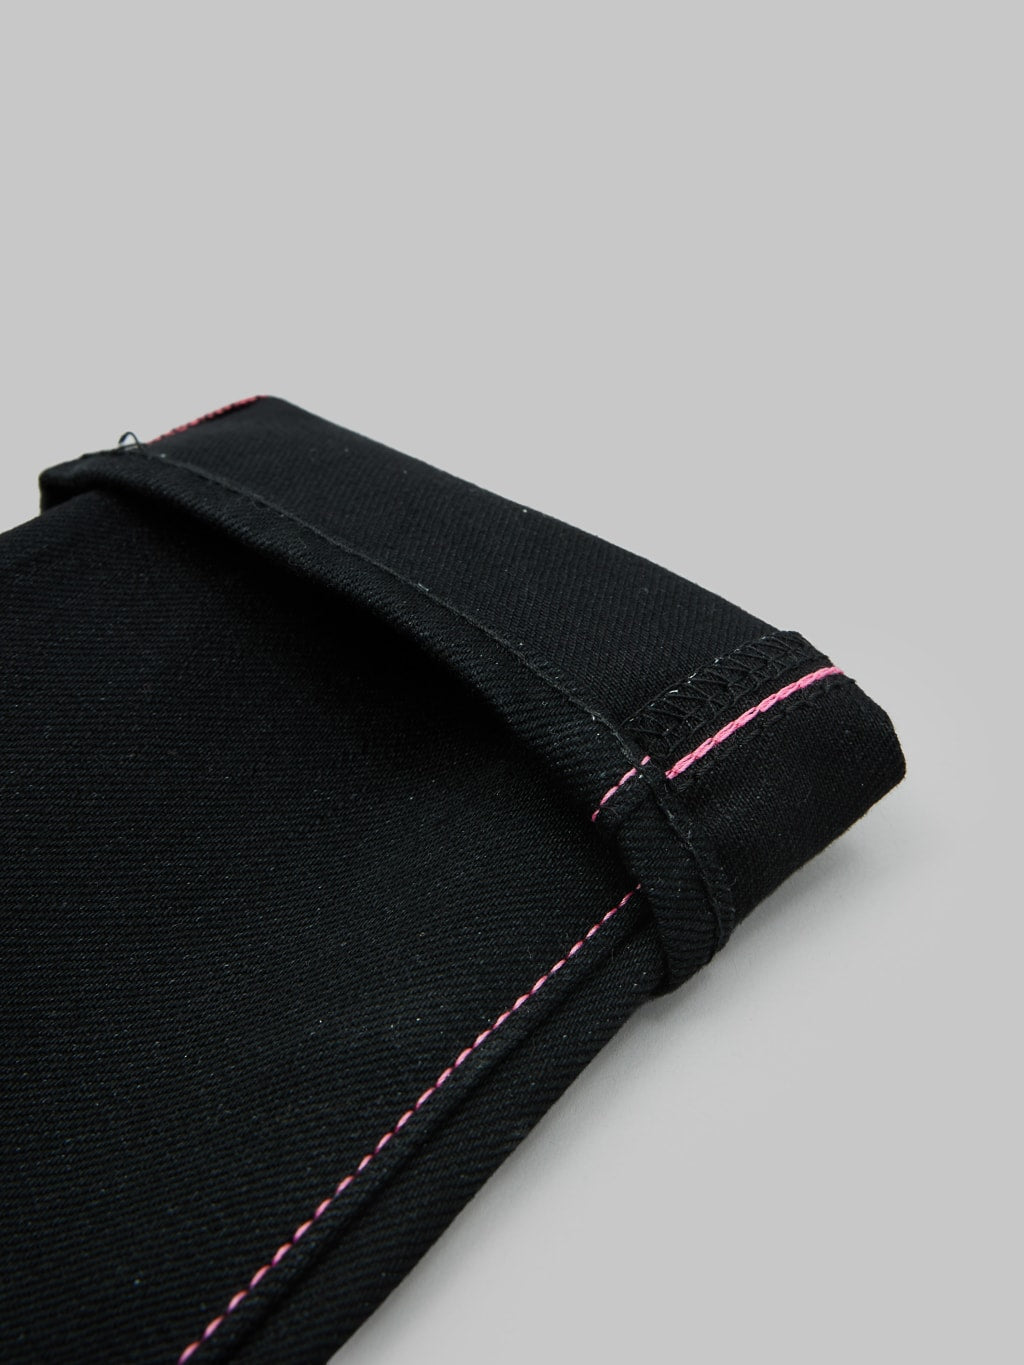 Momotaro 0605 B Black x Black Natural Tapered Jeans pink inseam